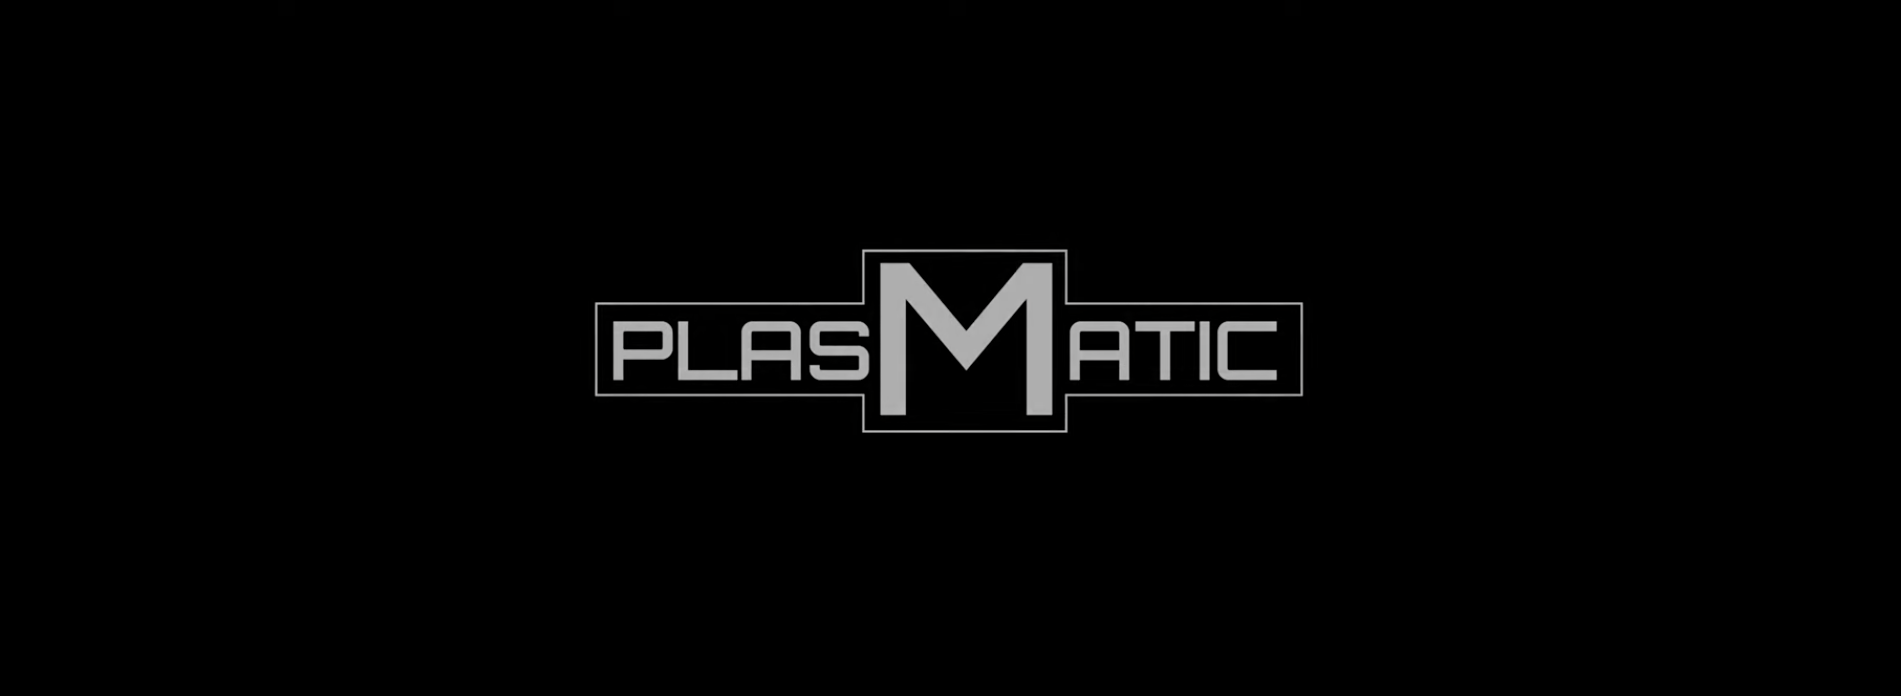 plasmatic-epic-vr